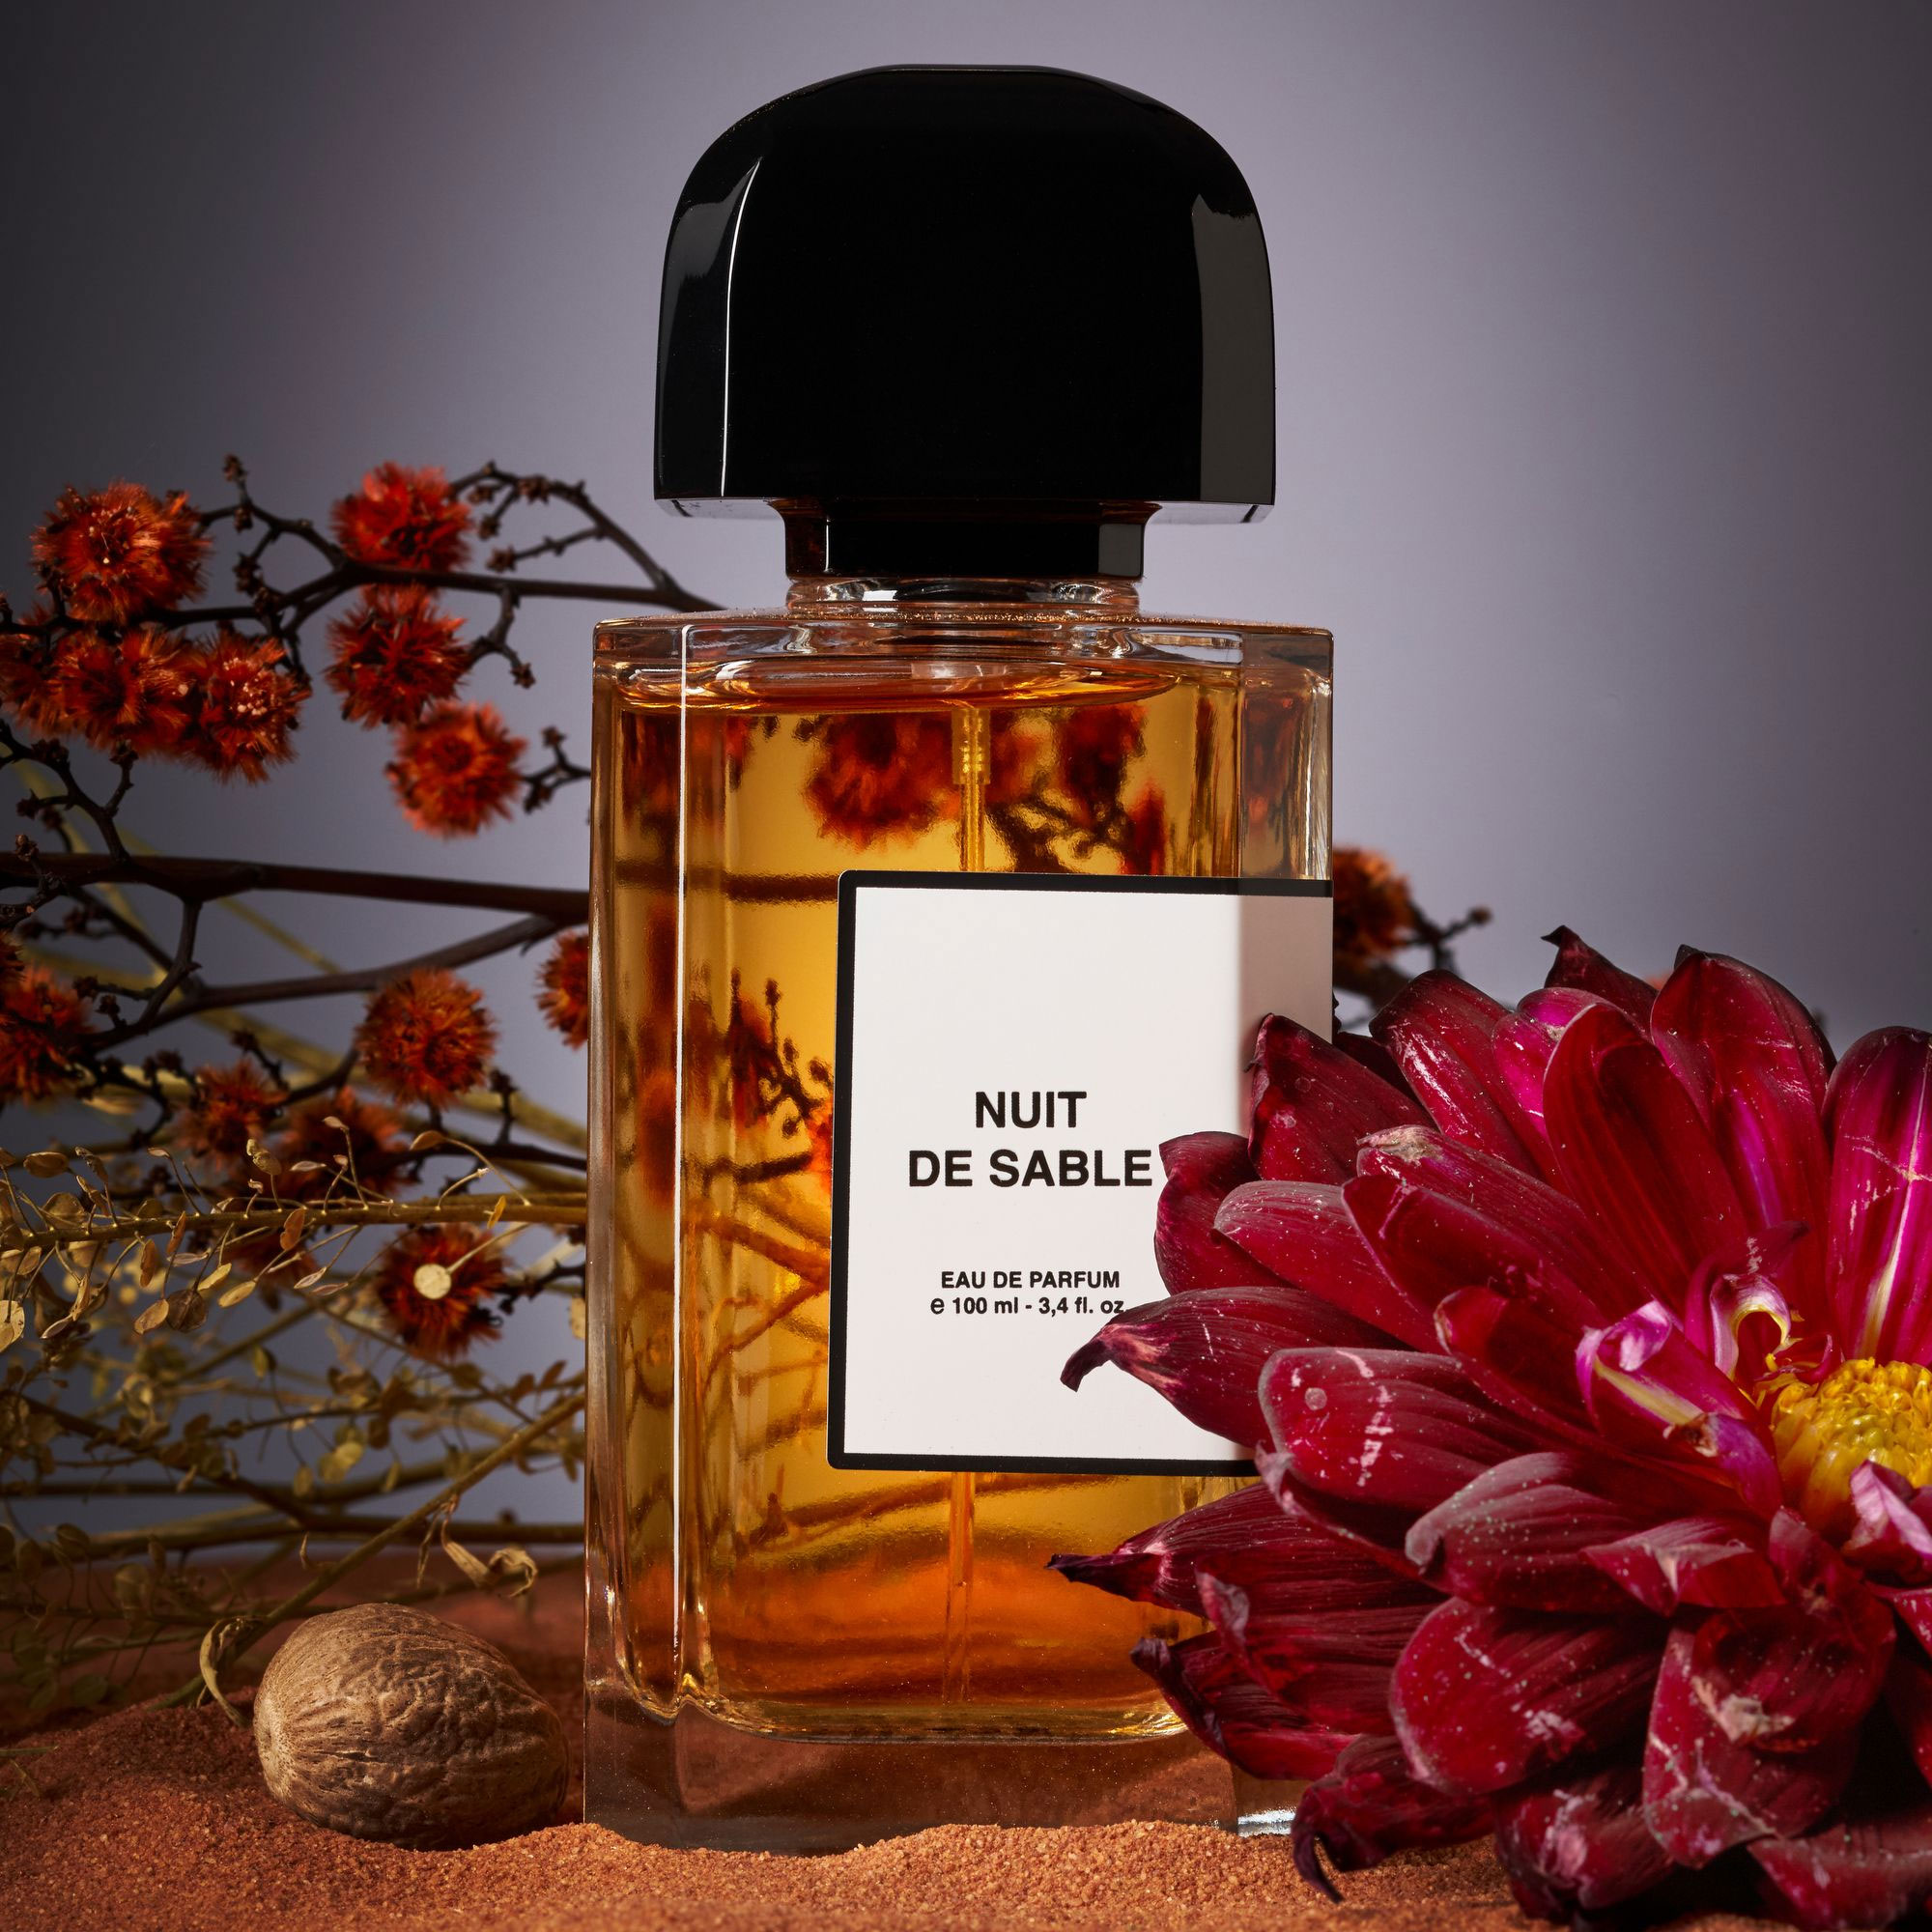 nuit de sable fragrance by bdk parfums with flowers